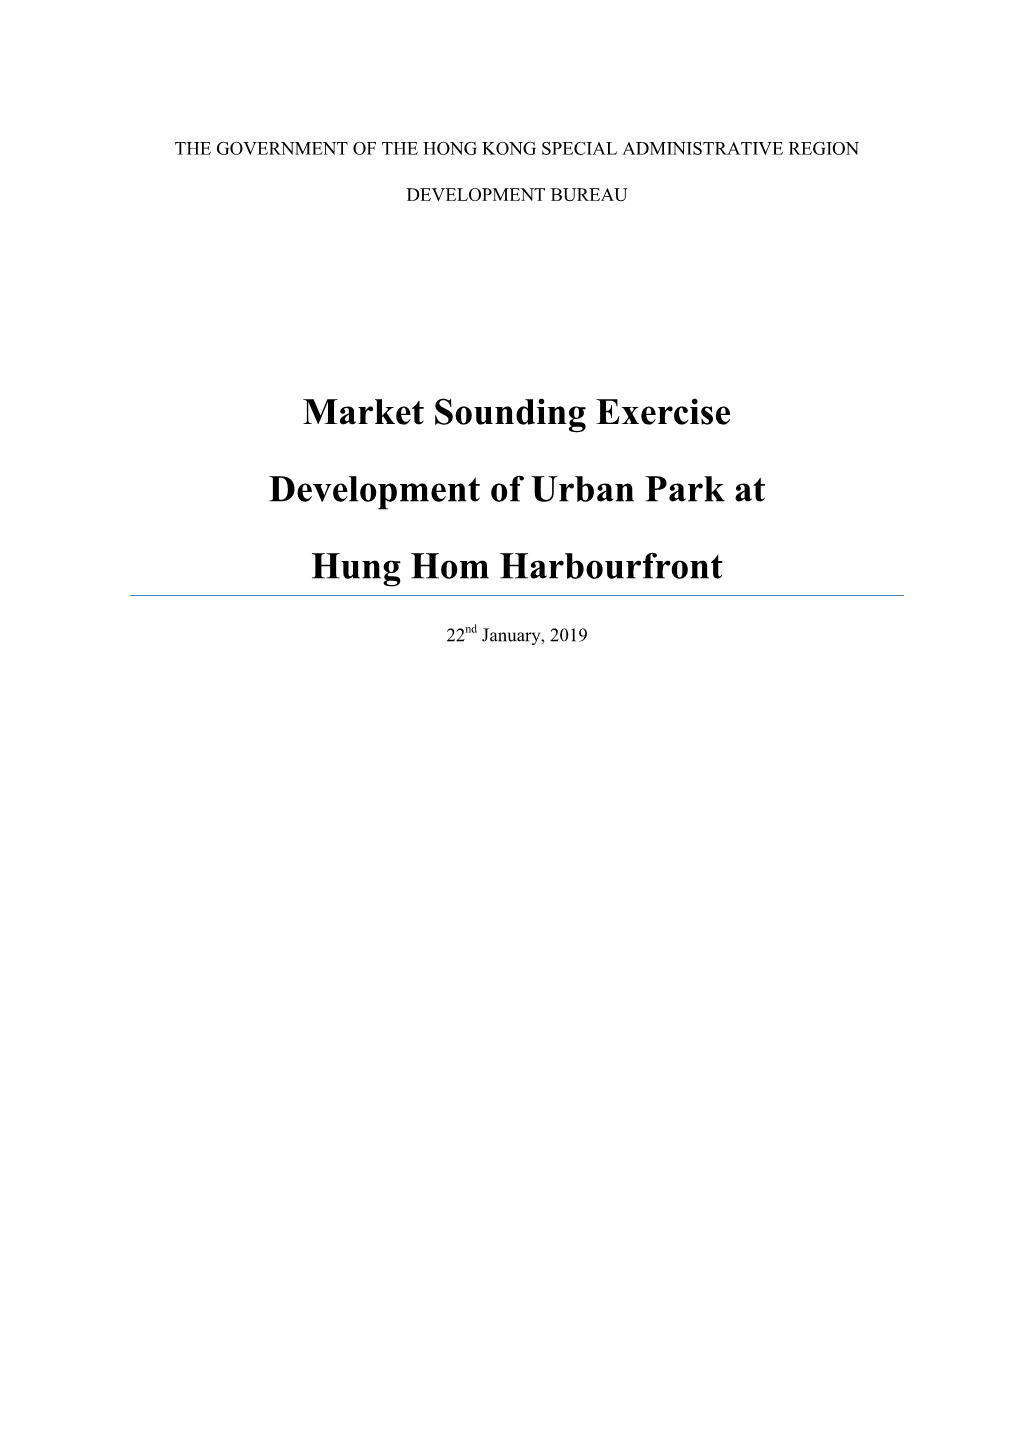 Market Sounding Exercise Document